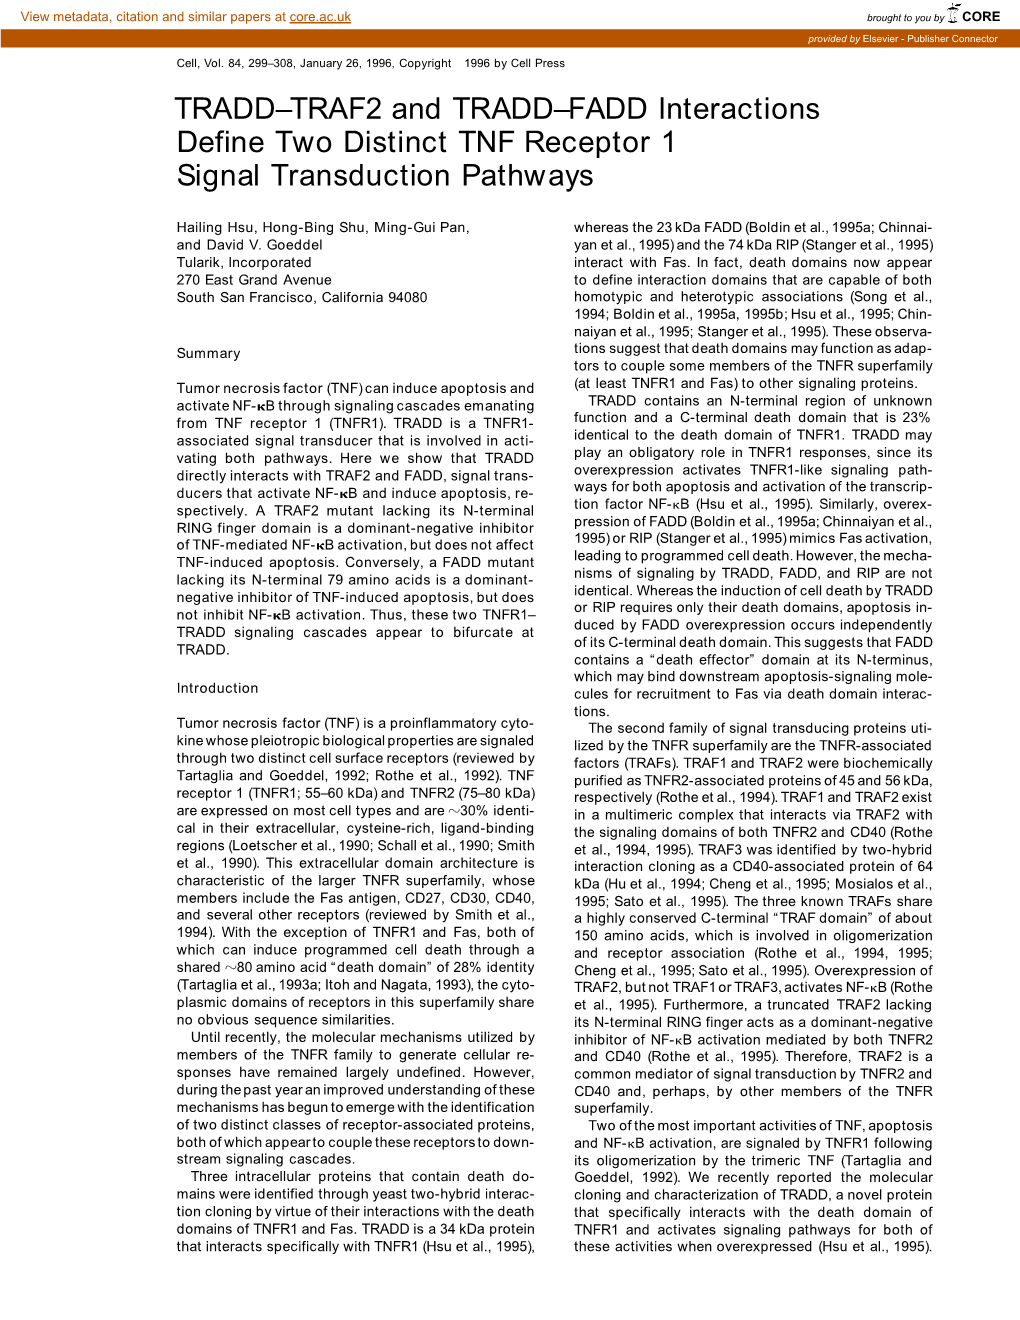 TRADD–TRAF2 and TRADD–FADD Interactions Define Two Distinct TNF Receptor 1 Signal Transduction Pathways